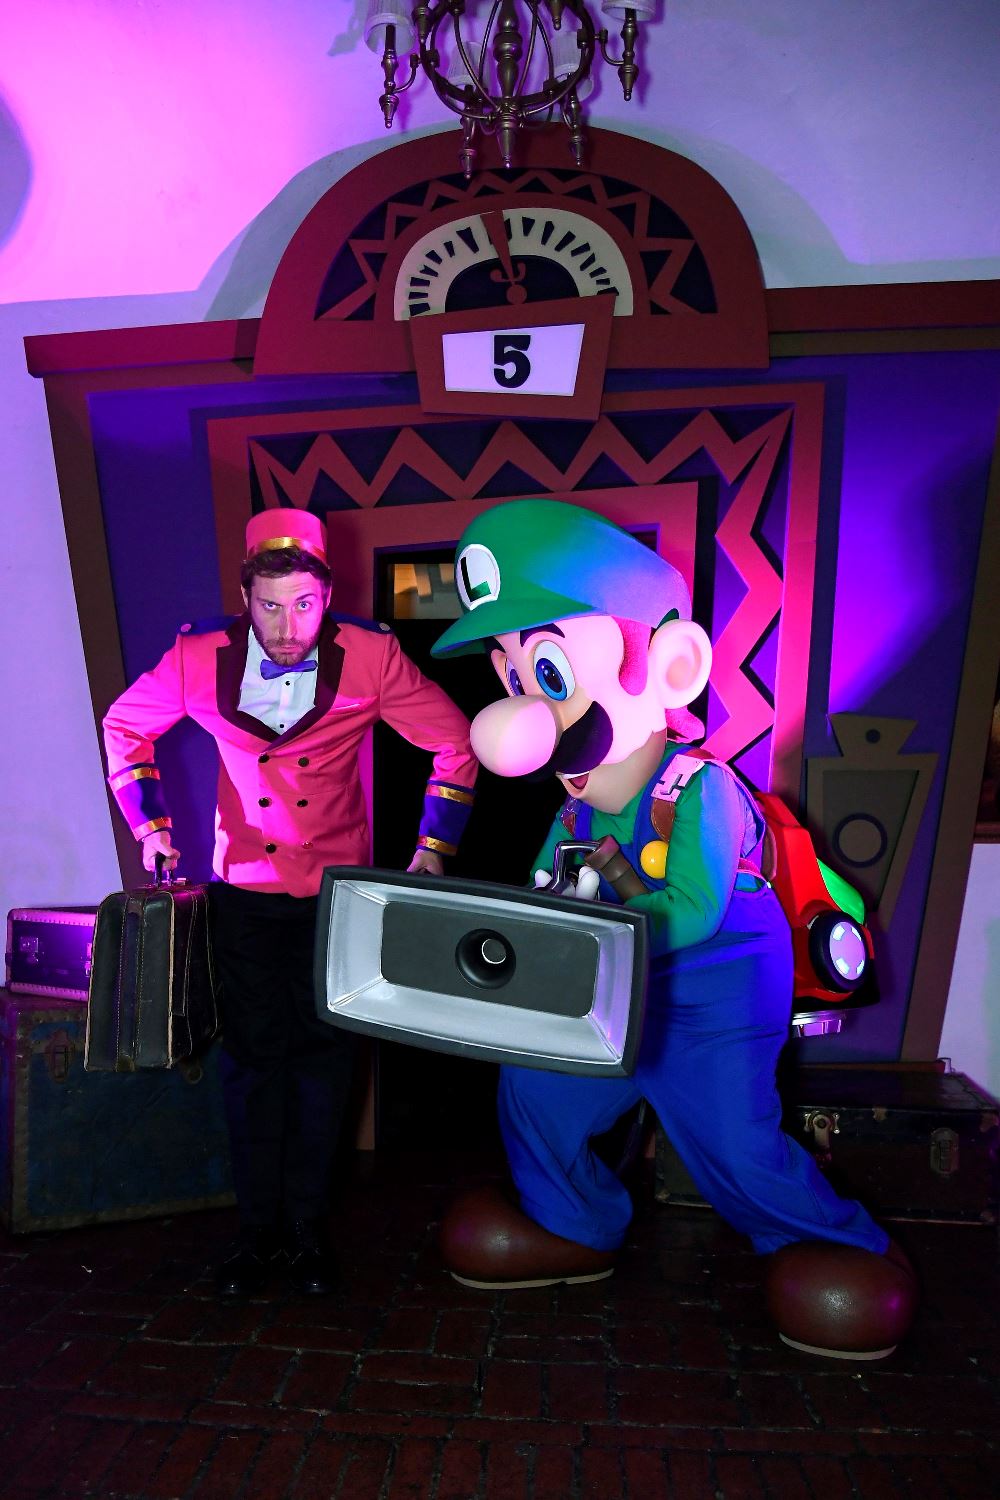 Photos of the Luigi's Mansion 3 haunted mansion event